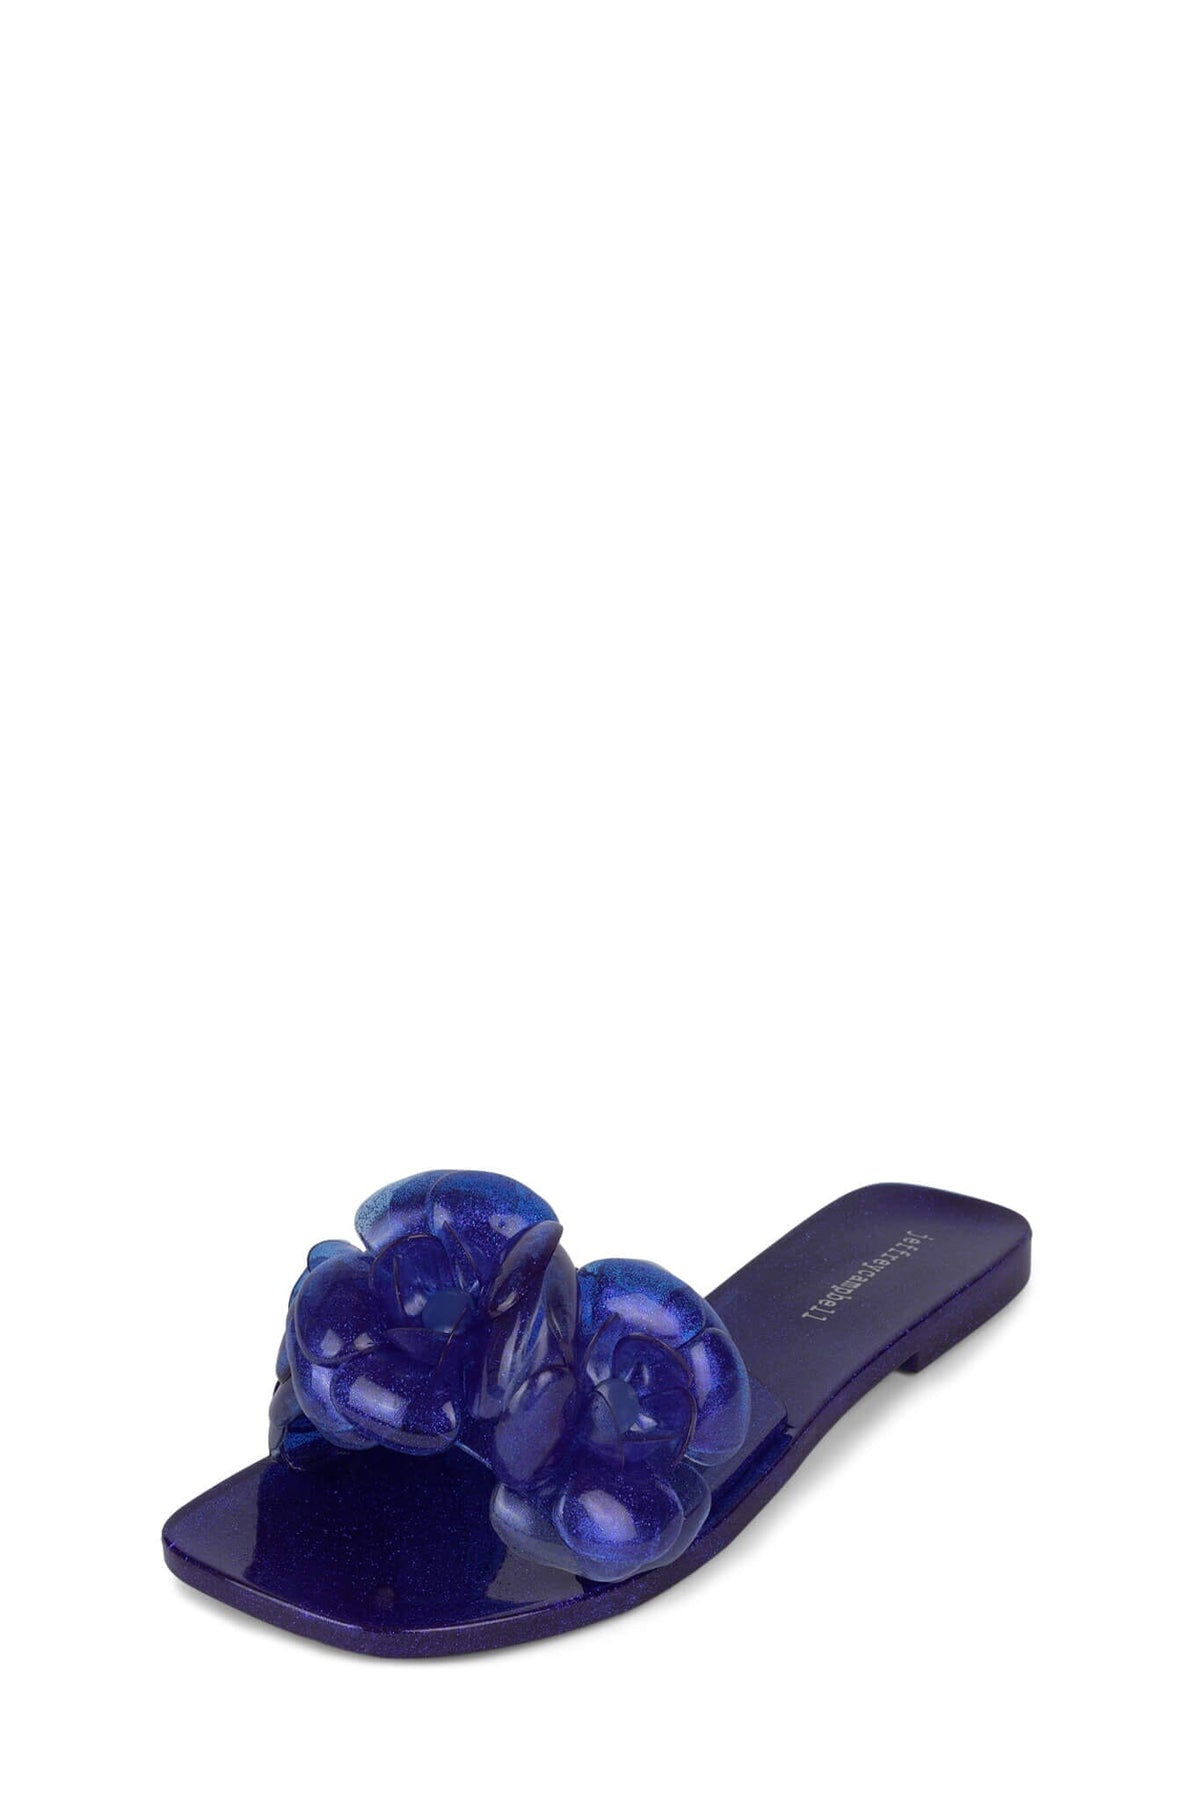 FLORALEE Jeffrey Campbell Jelly Sandals Blue Glitter